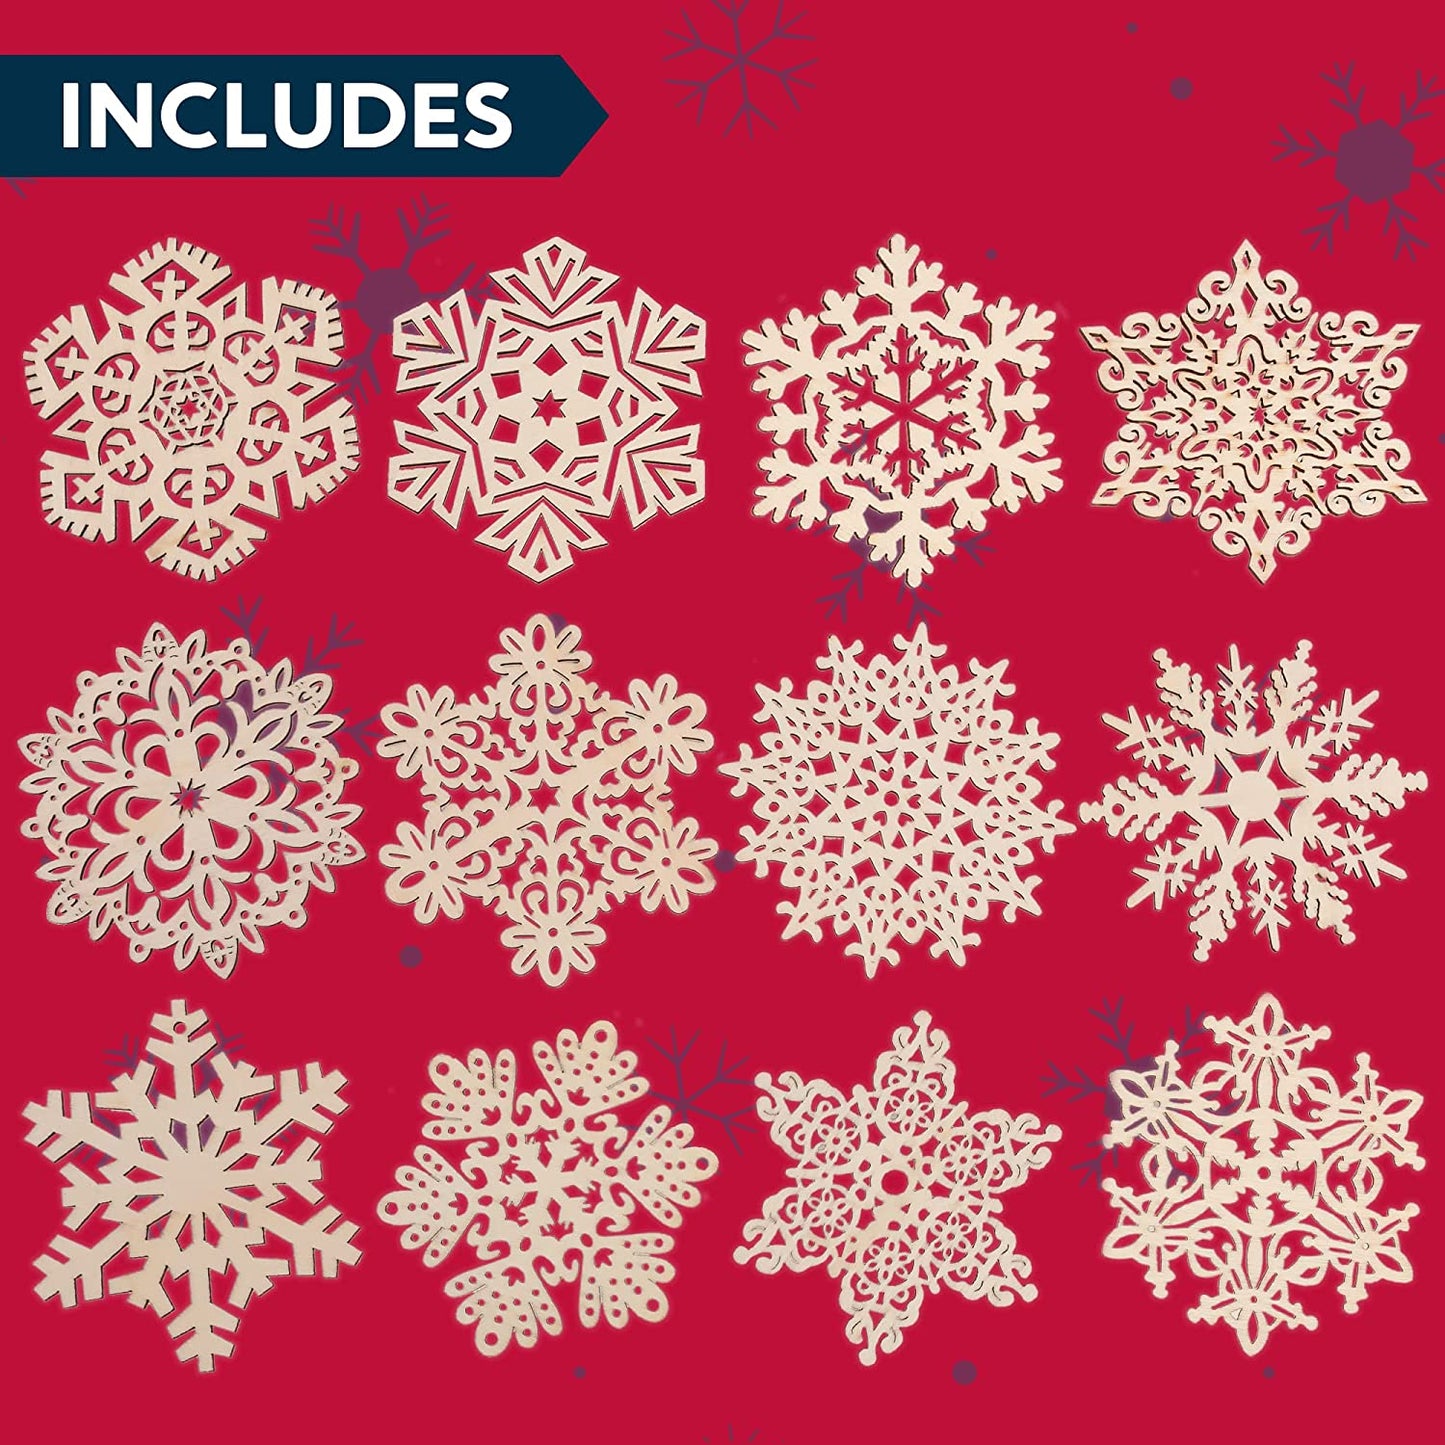 36 Pcs Wooden Snowflakes Hanging Ornaments